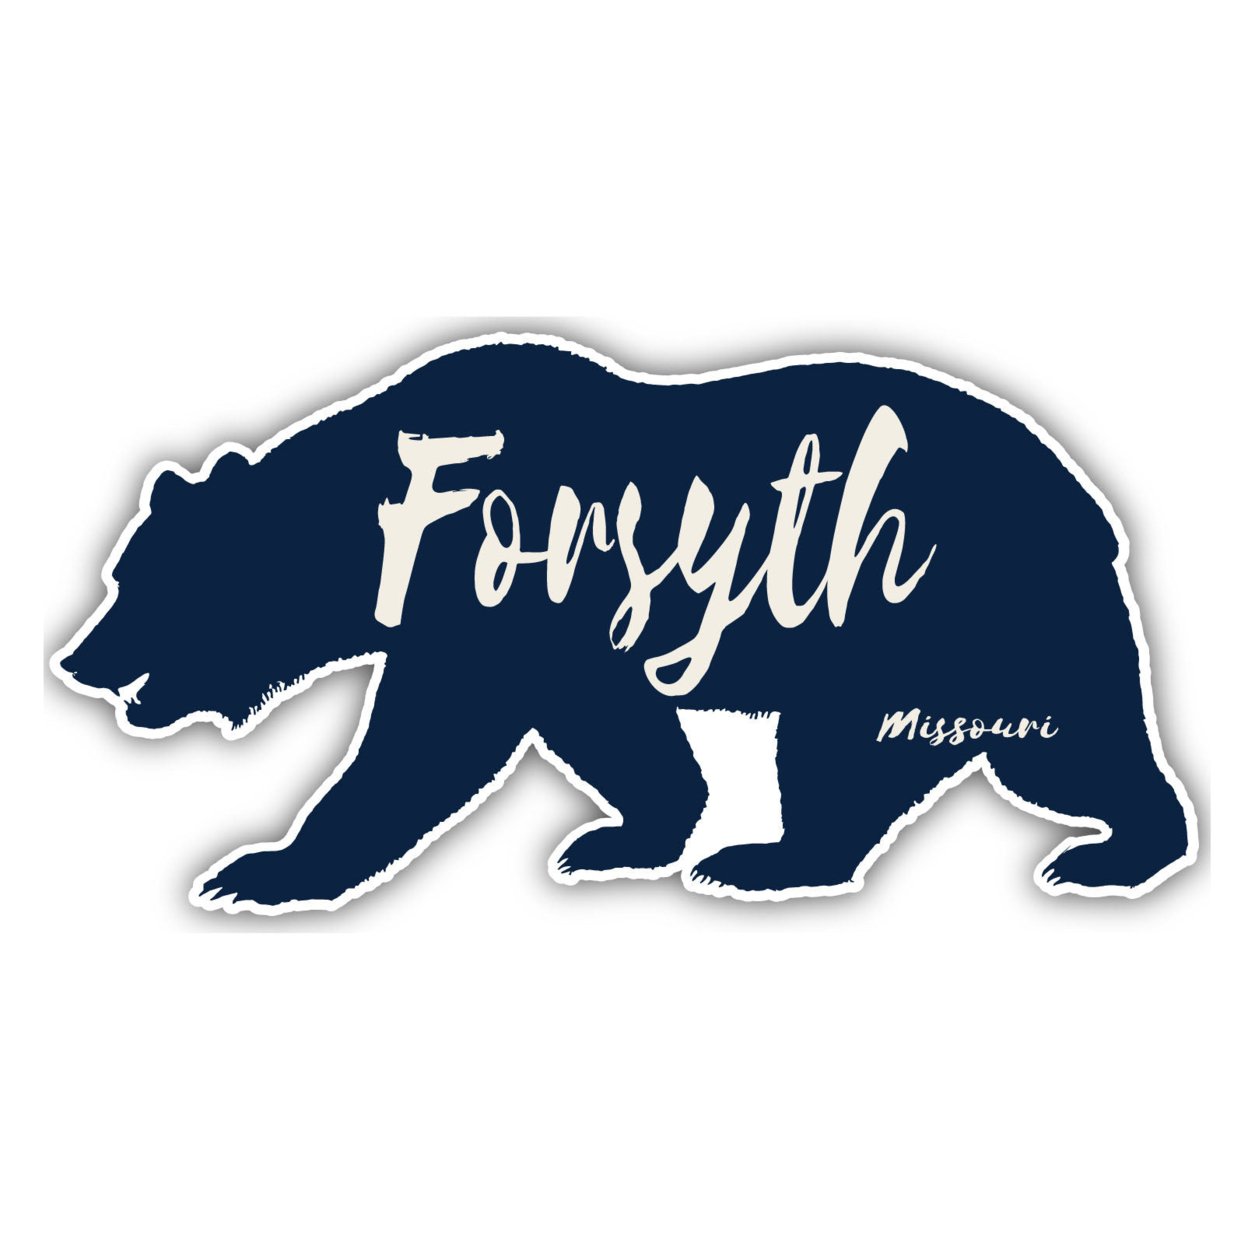 Forsyth Missouri Souvenir Decorative Stickers (Choose Theme And Size) - 4-Pack, 12-Inch, Bear